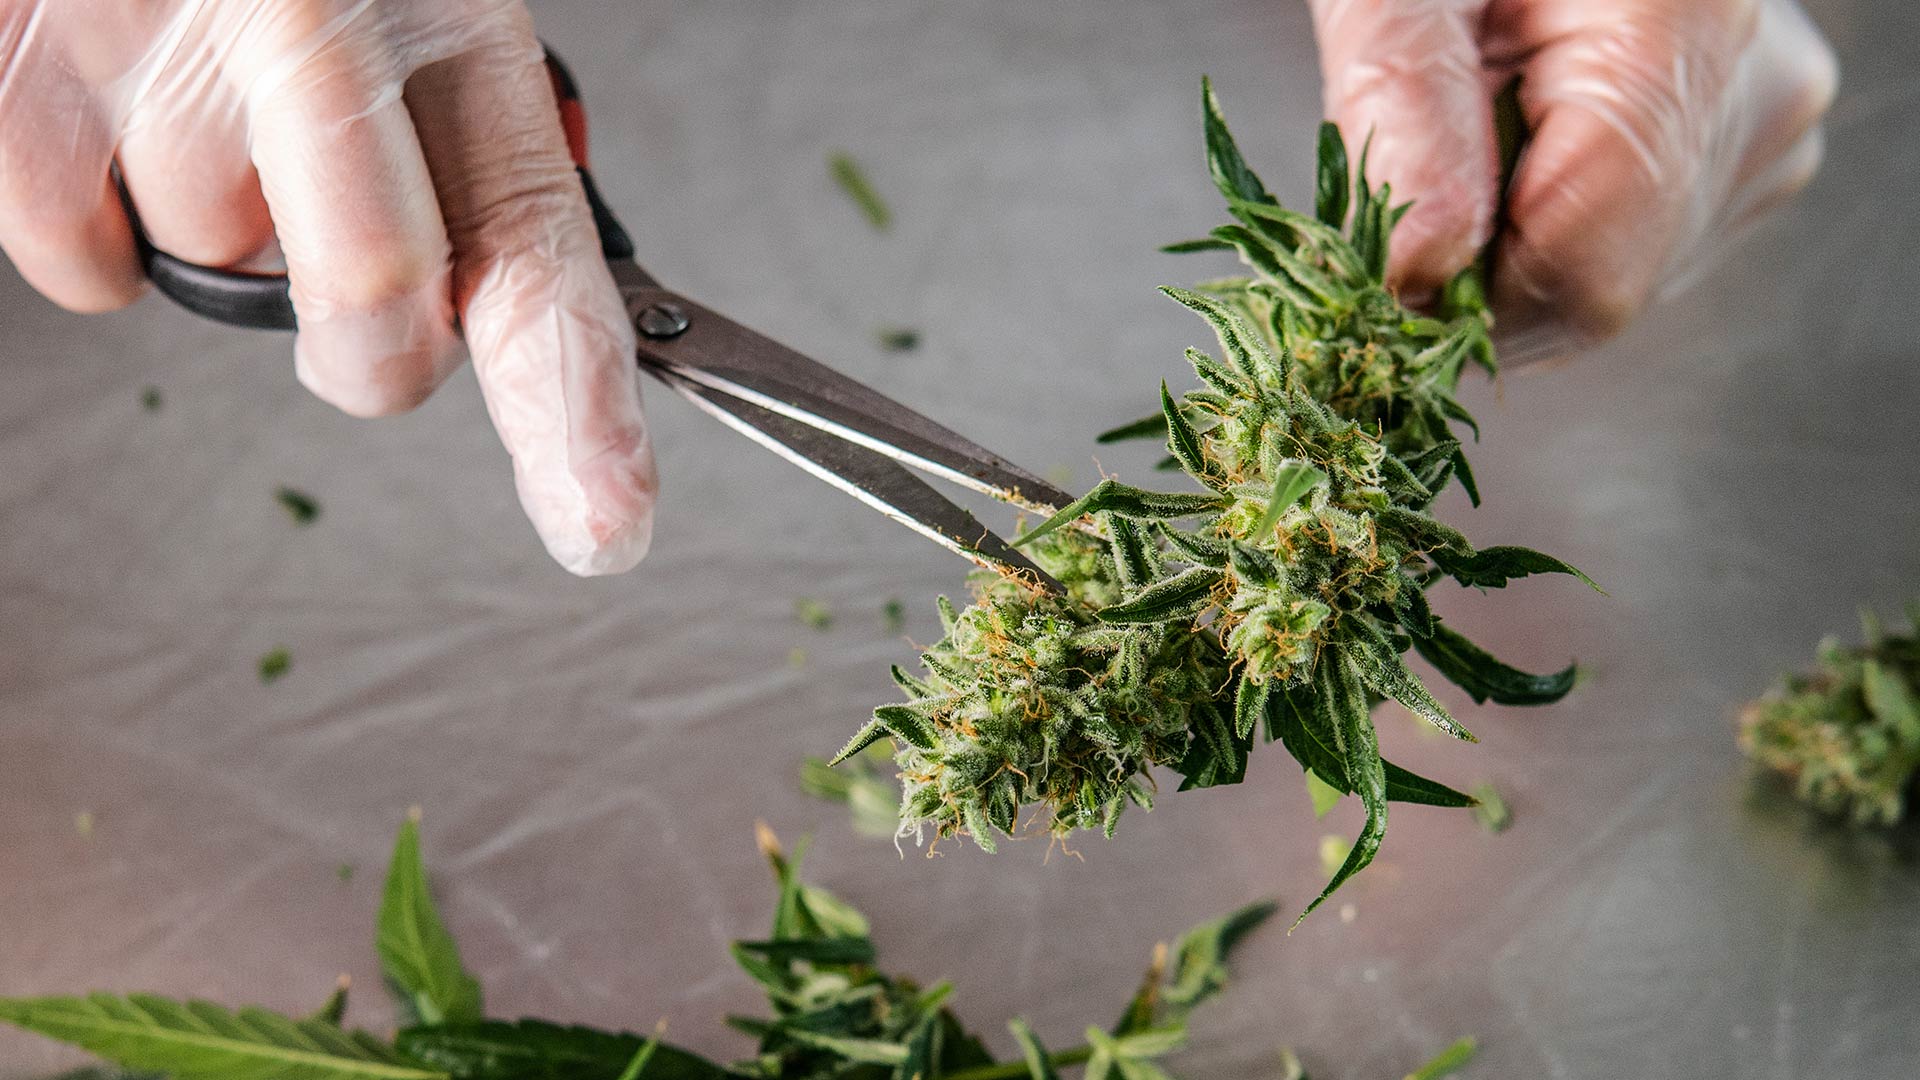 hand cutting cannabis flower